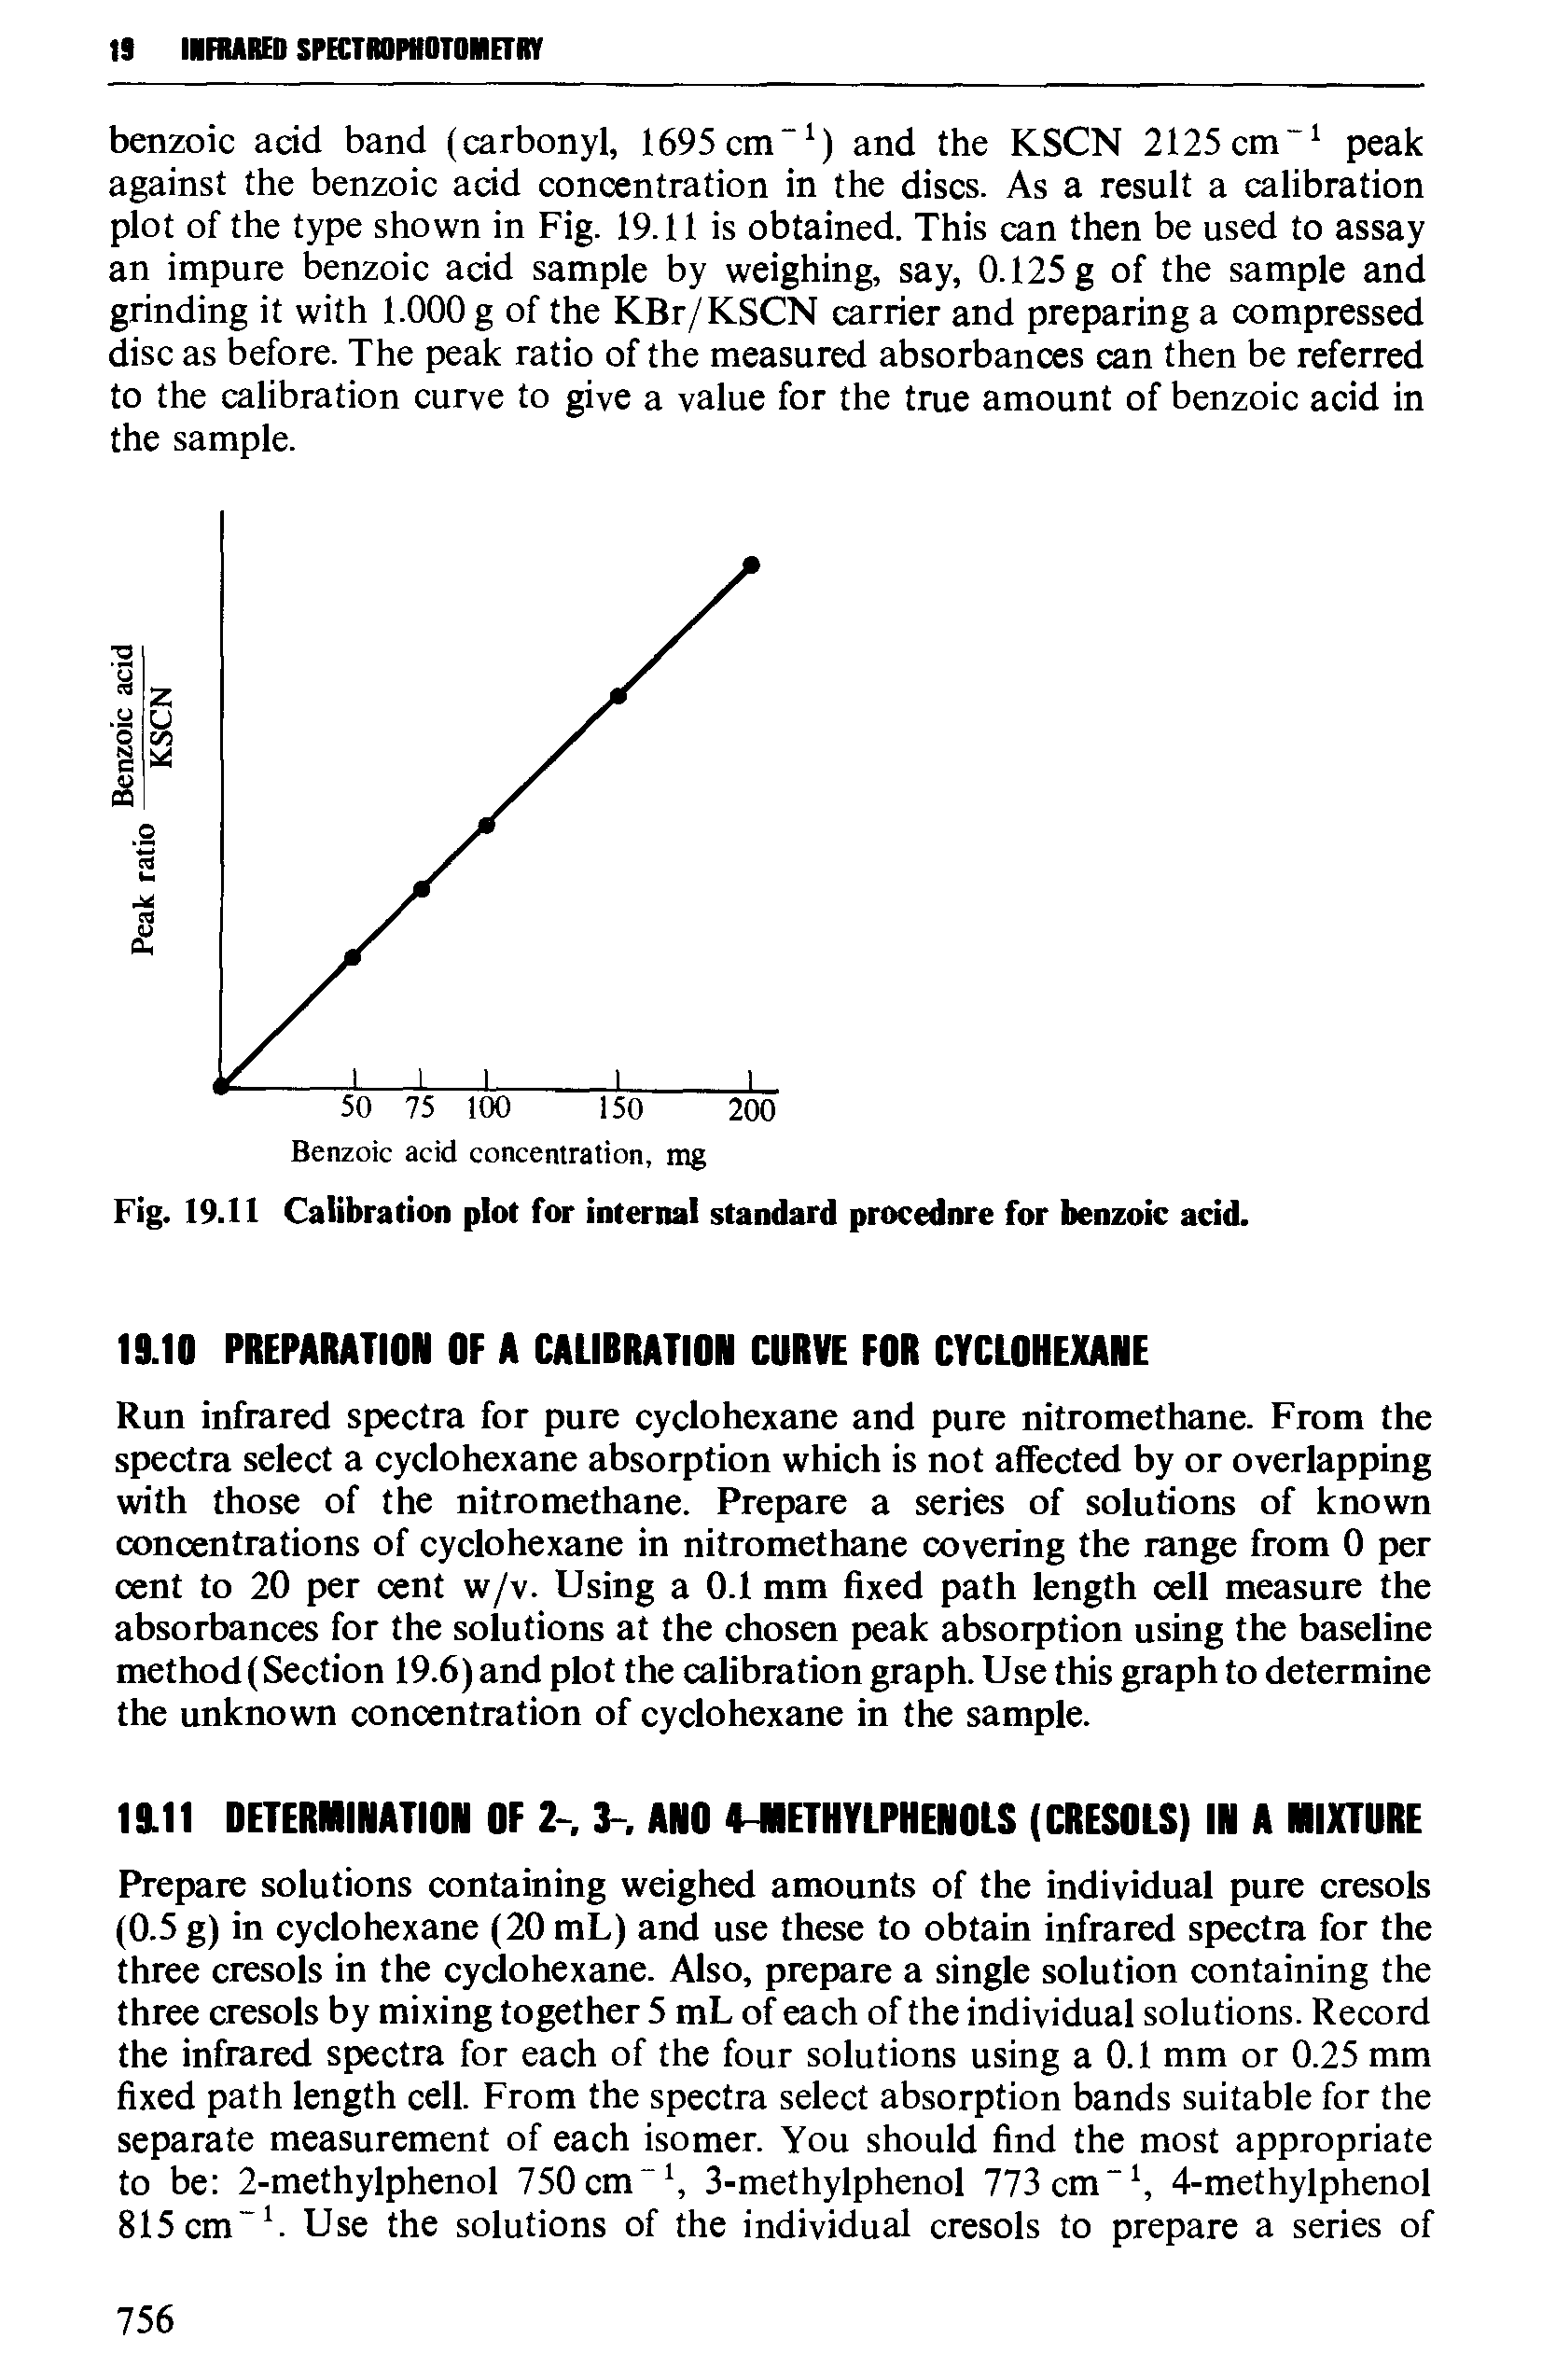 Fig. 19.11 Calibration plot for internal standard procedure for benzoic acid.